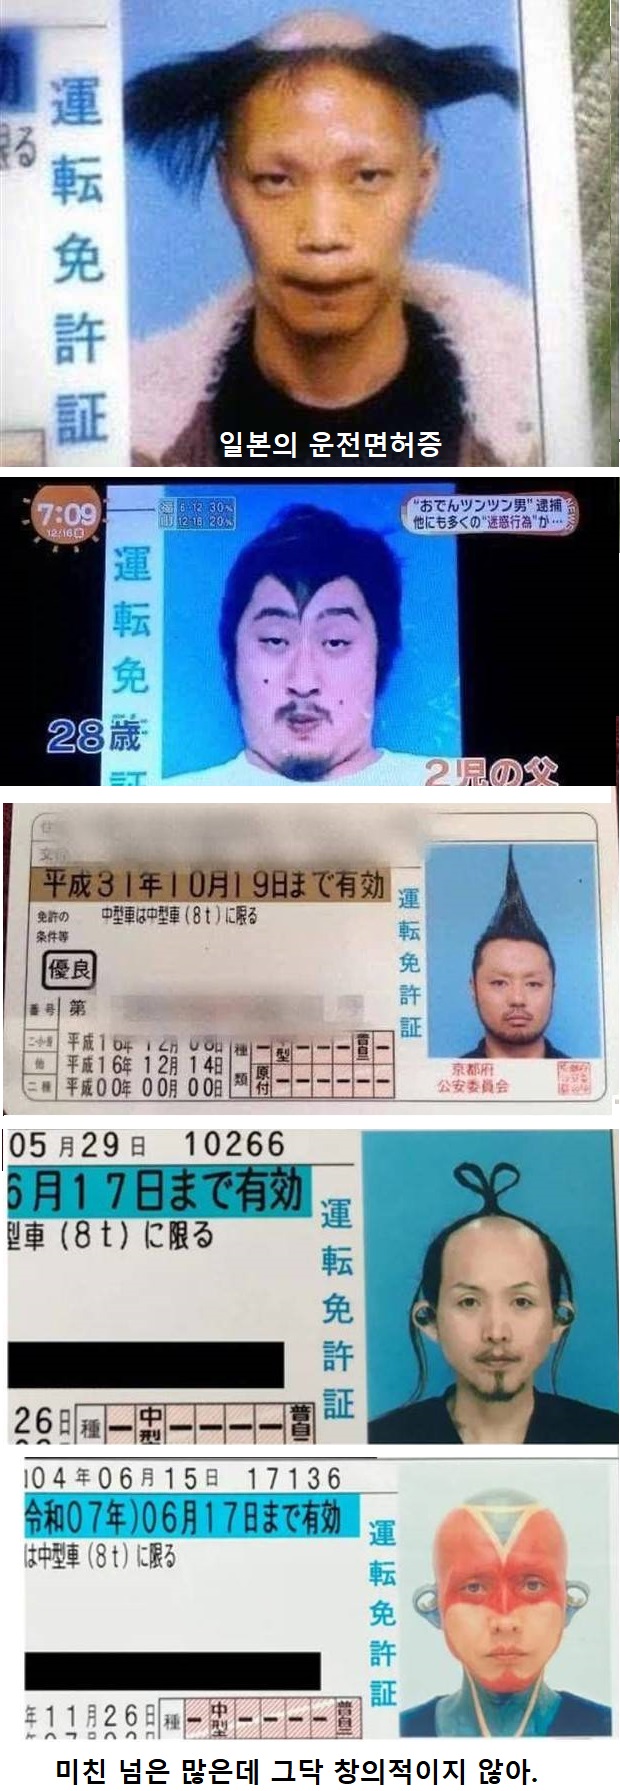 crazy-japanese-driver-licences-1.jpg